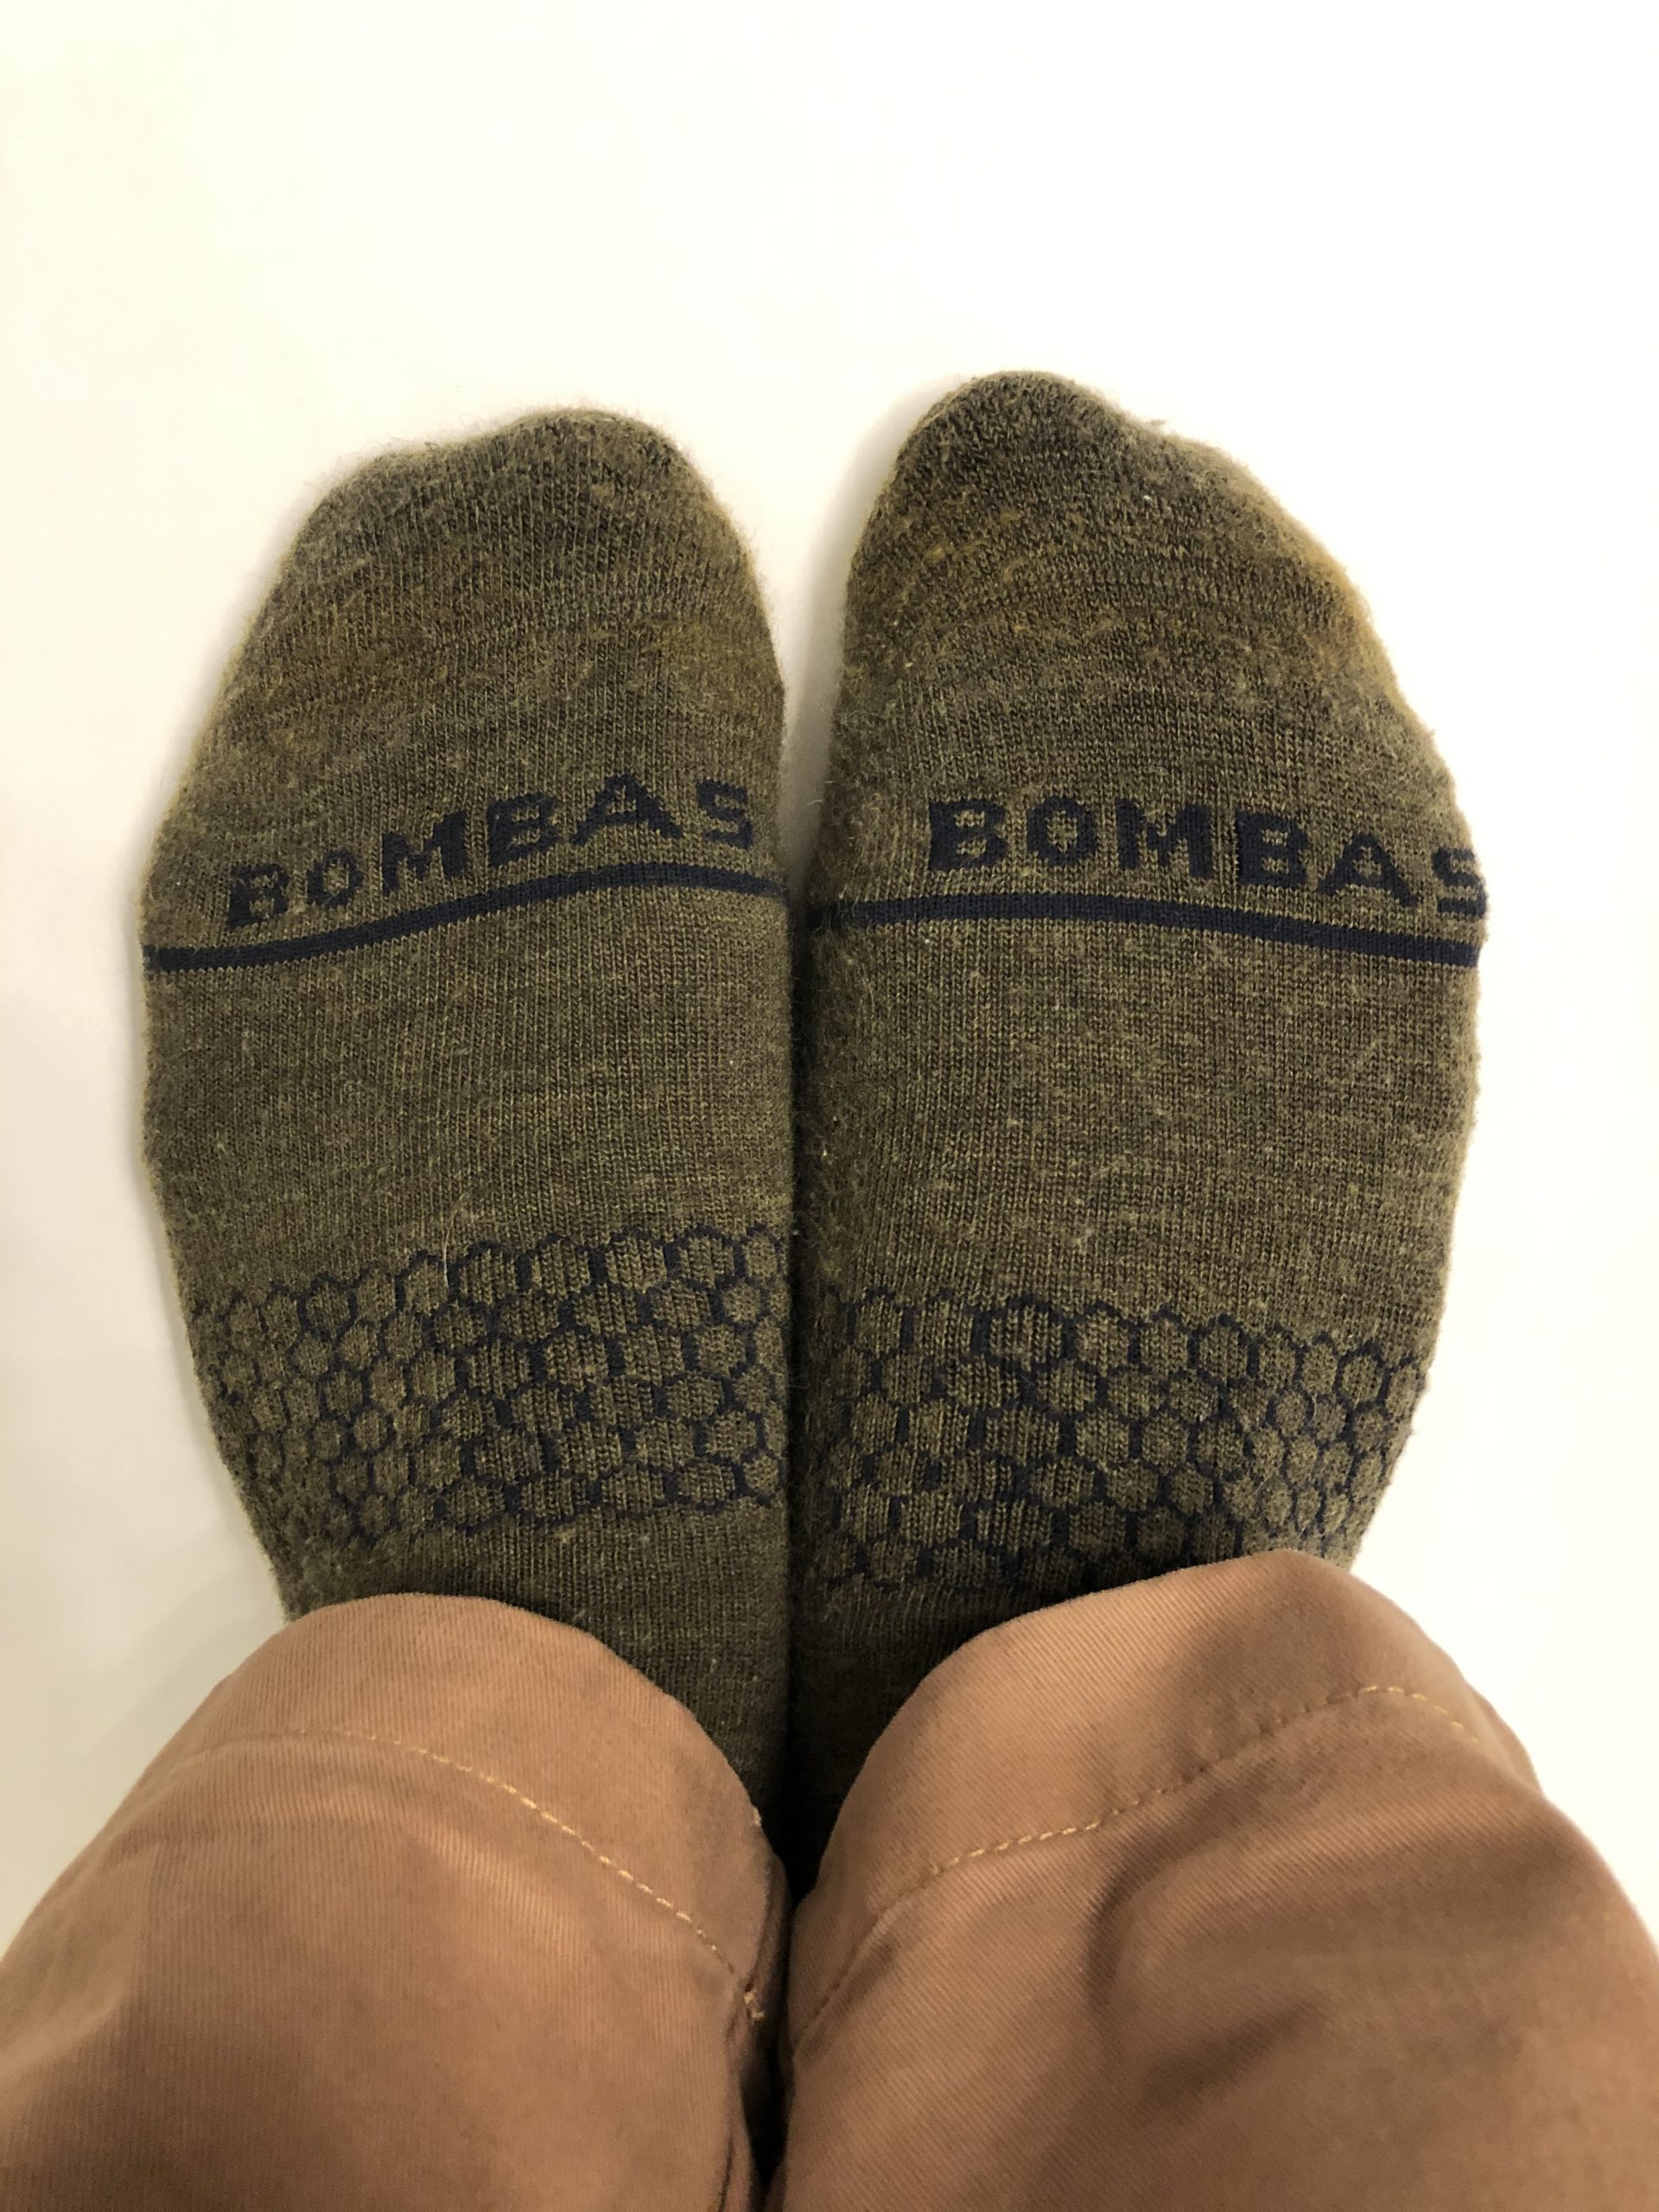 Bombas dress socks